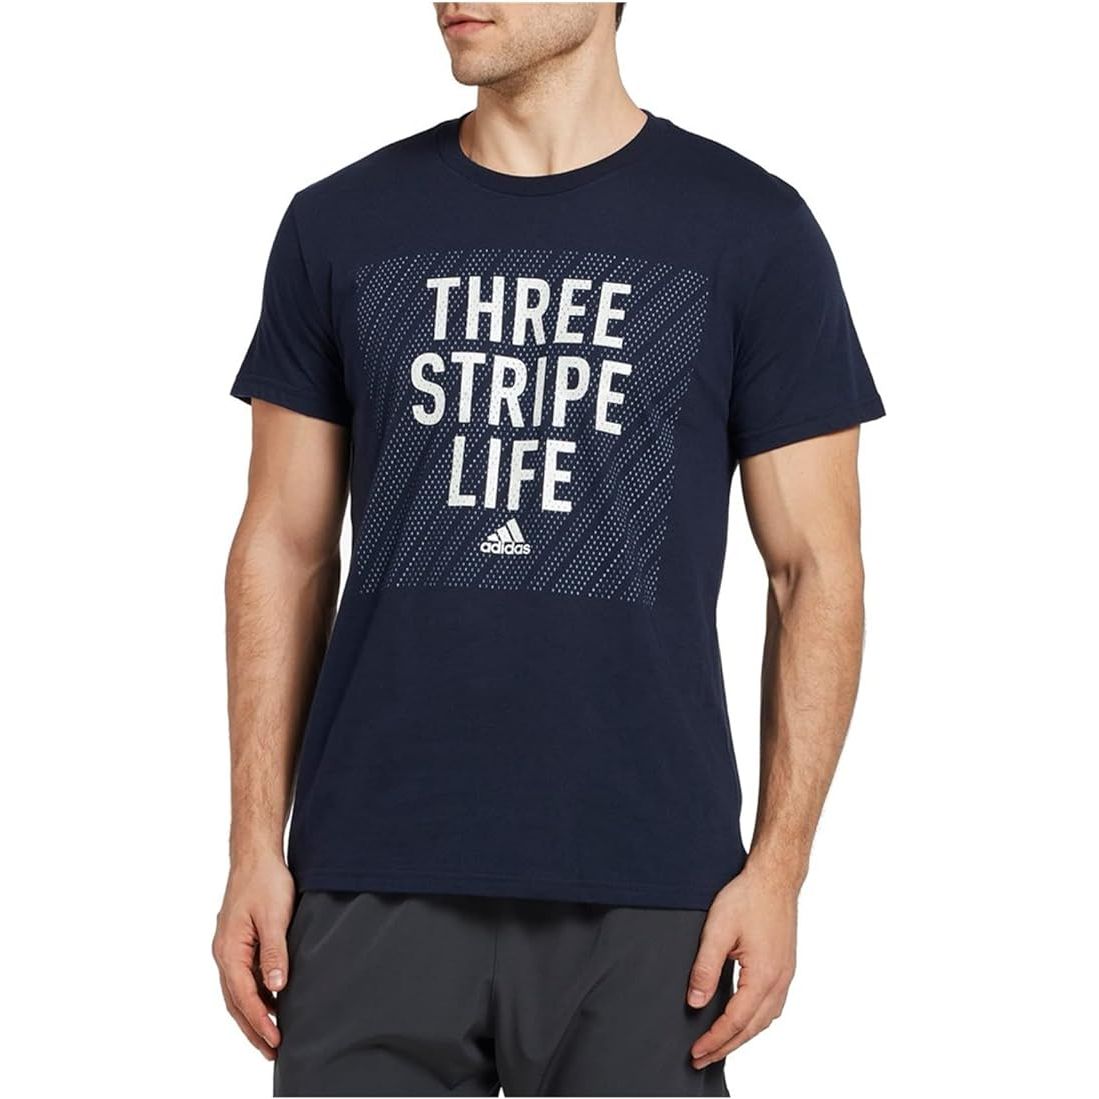 Adidas Three Stripe Life Men's Tee טי שירט גברים אדידס